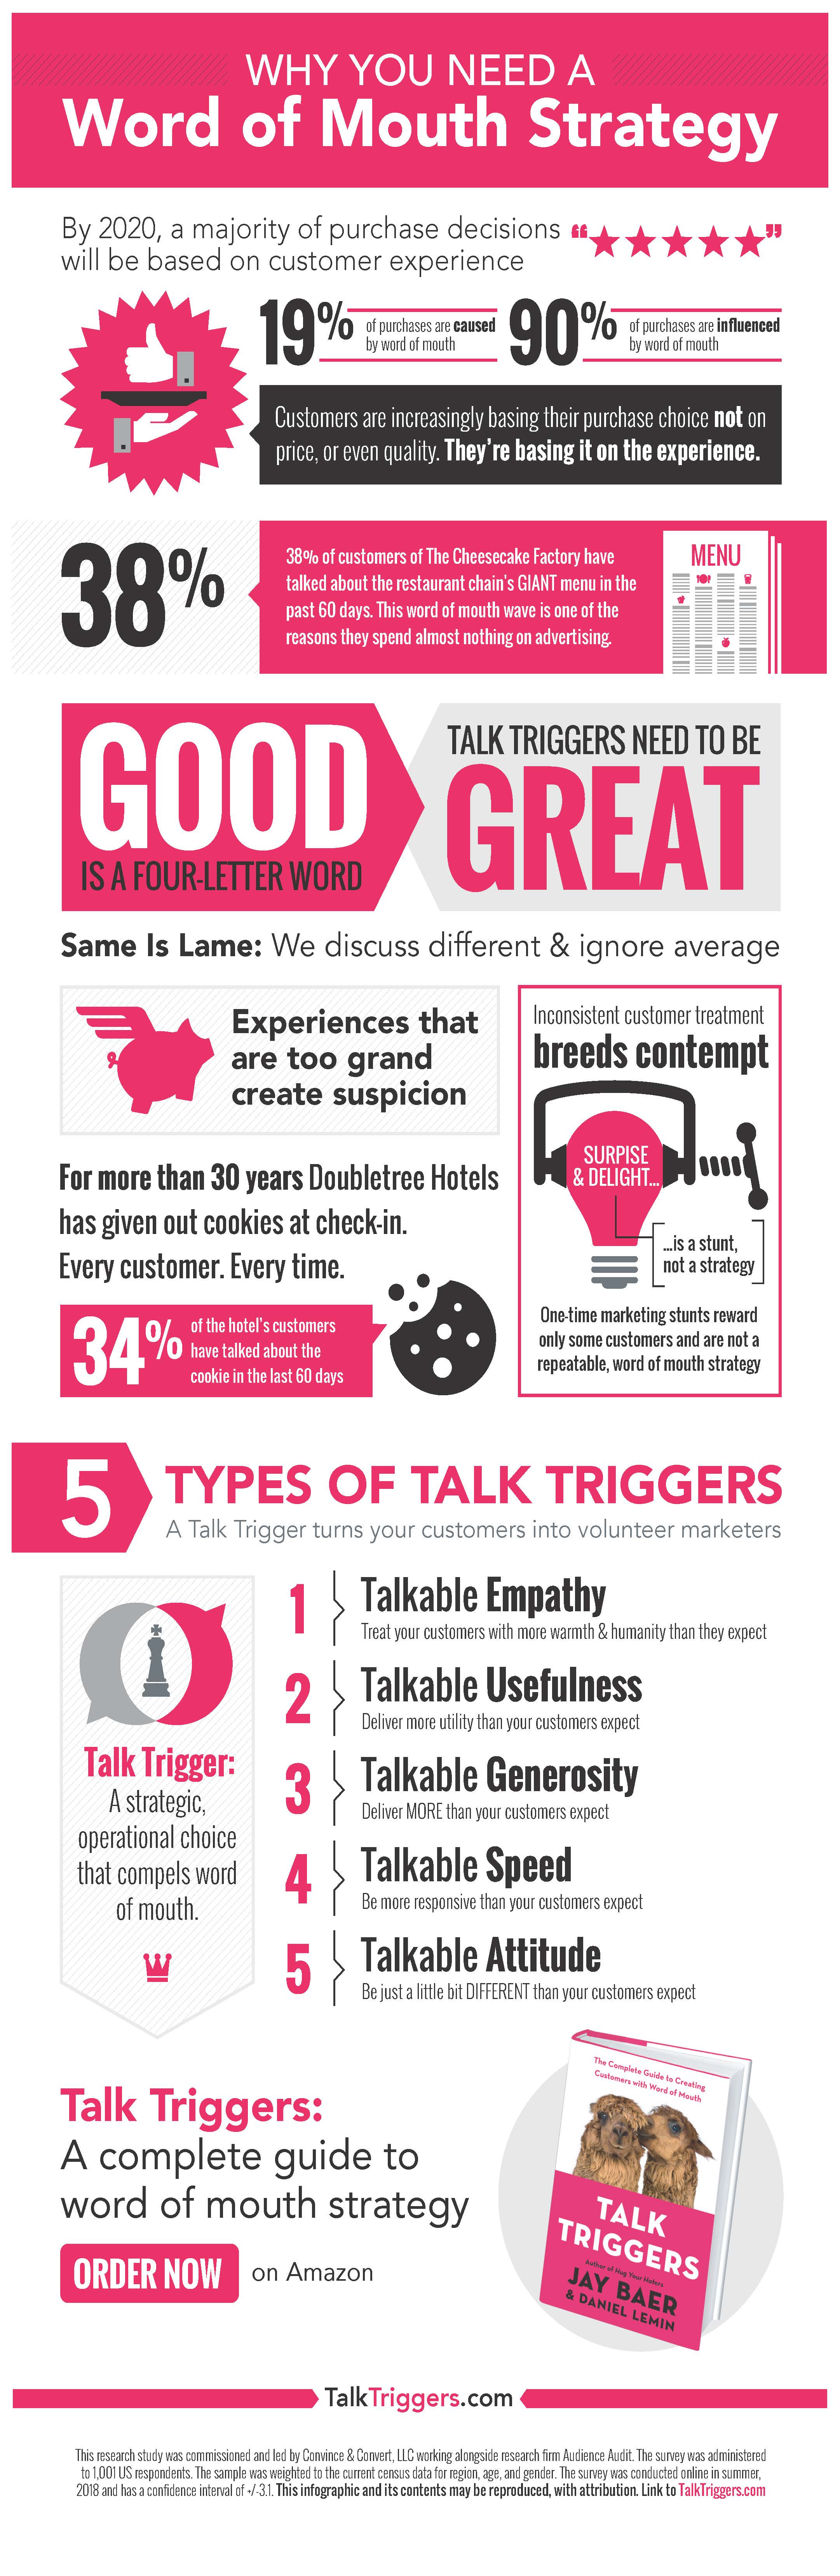 Talk Triggers Jay Baer Daniel Lemin Word of Mouth Marketing Infographic